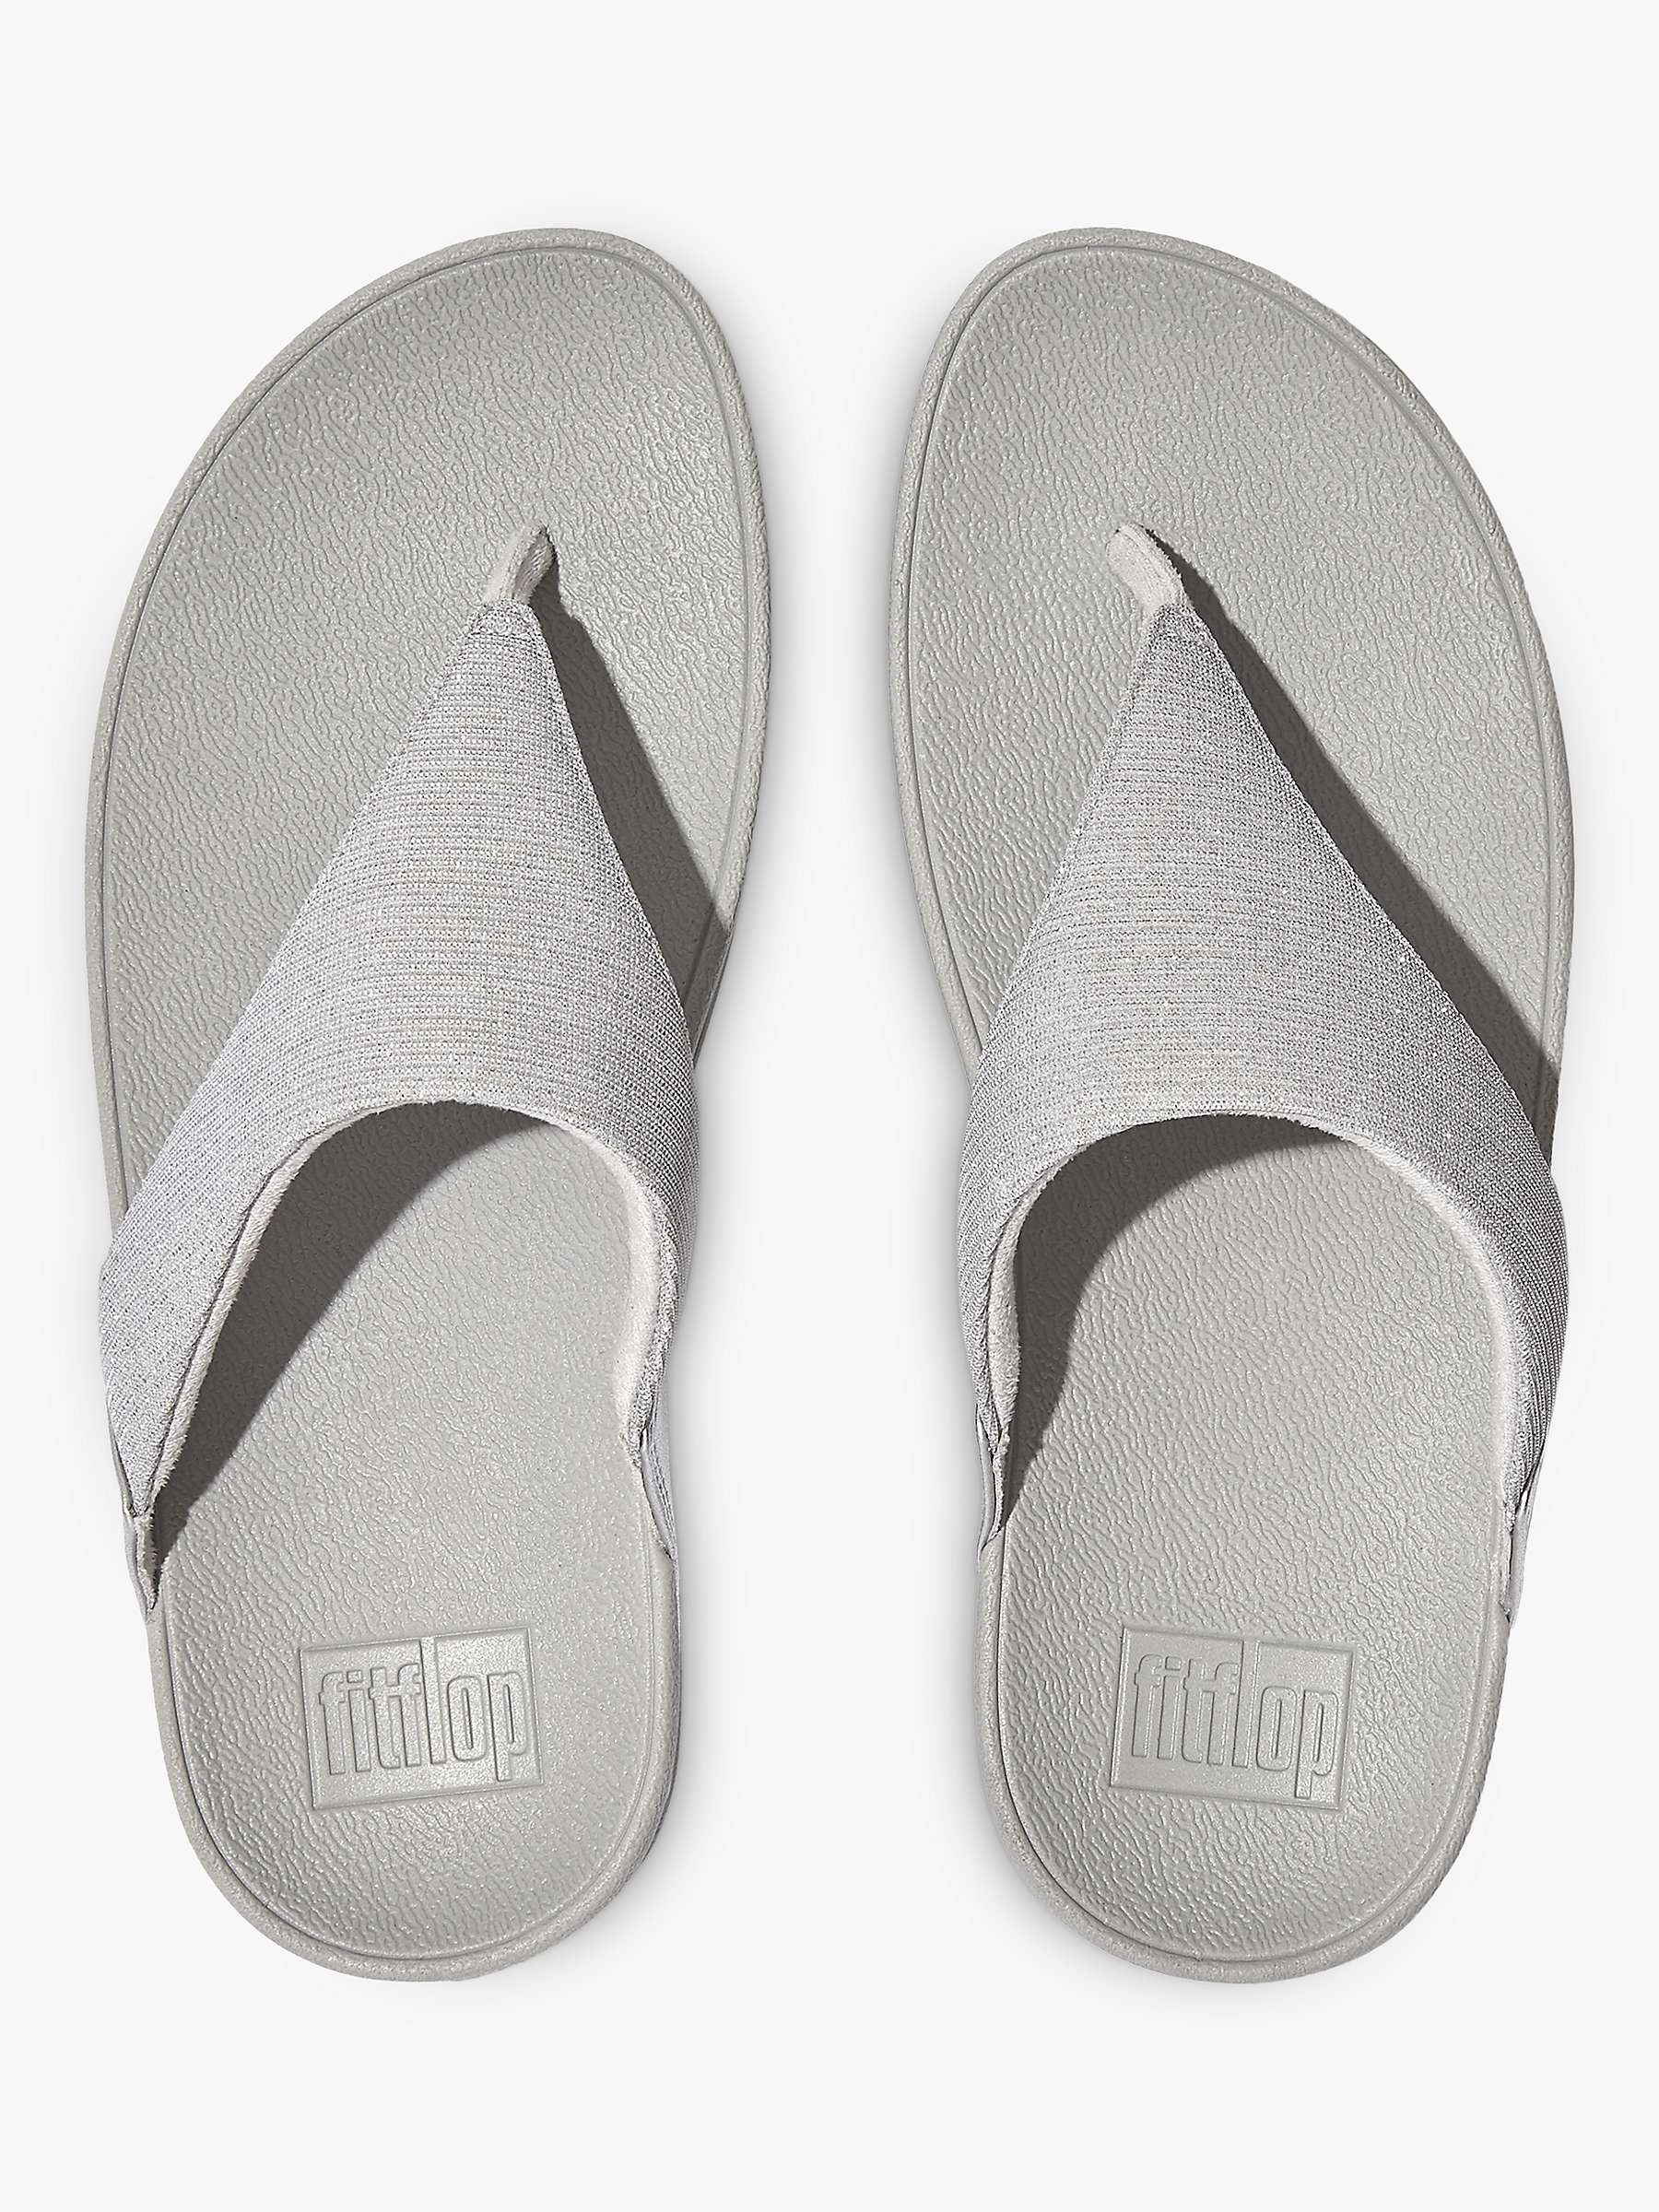 Buy FitFlop Lulu Toe Post Flatform Sandals, Silver Online at johnlewis.com